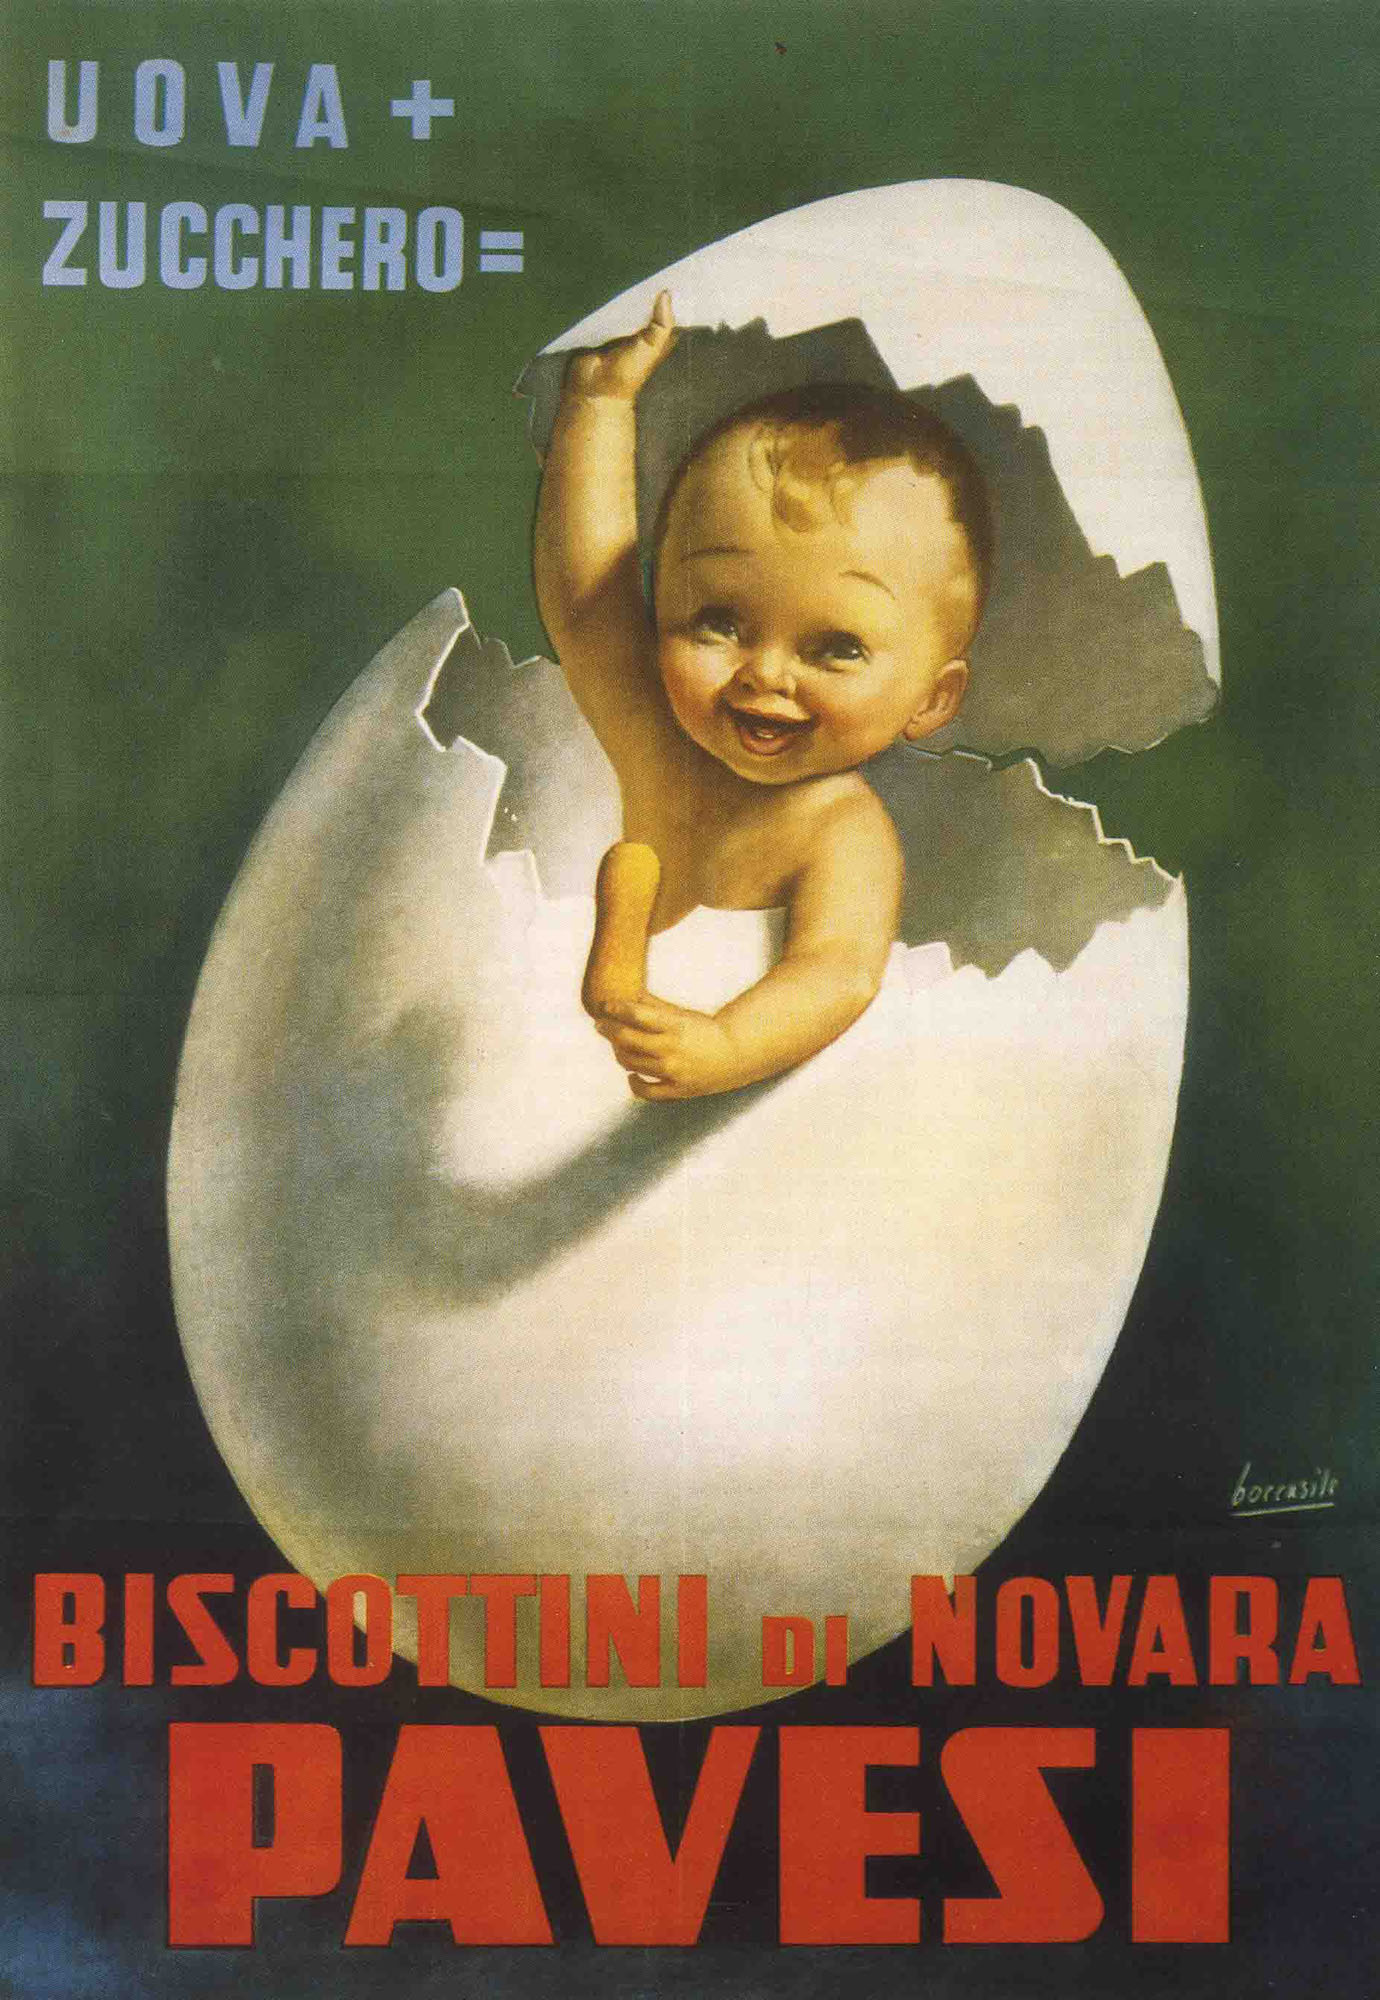 Pavesini posters - Gino Boccasile, Pavesi Biscuits from Novara 1948